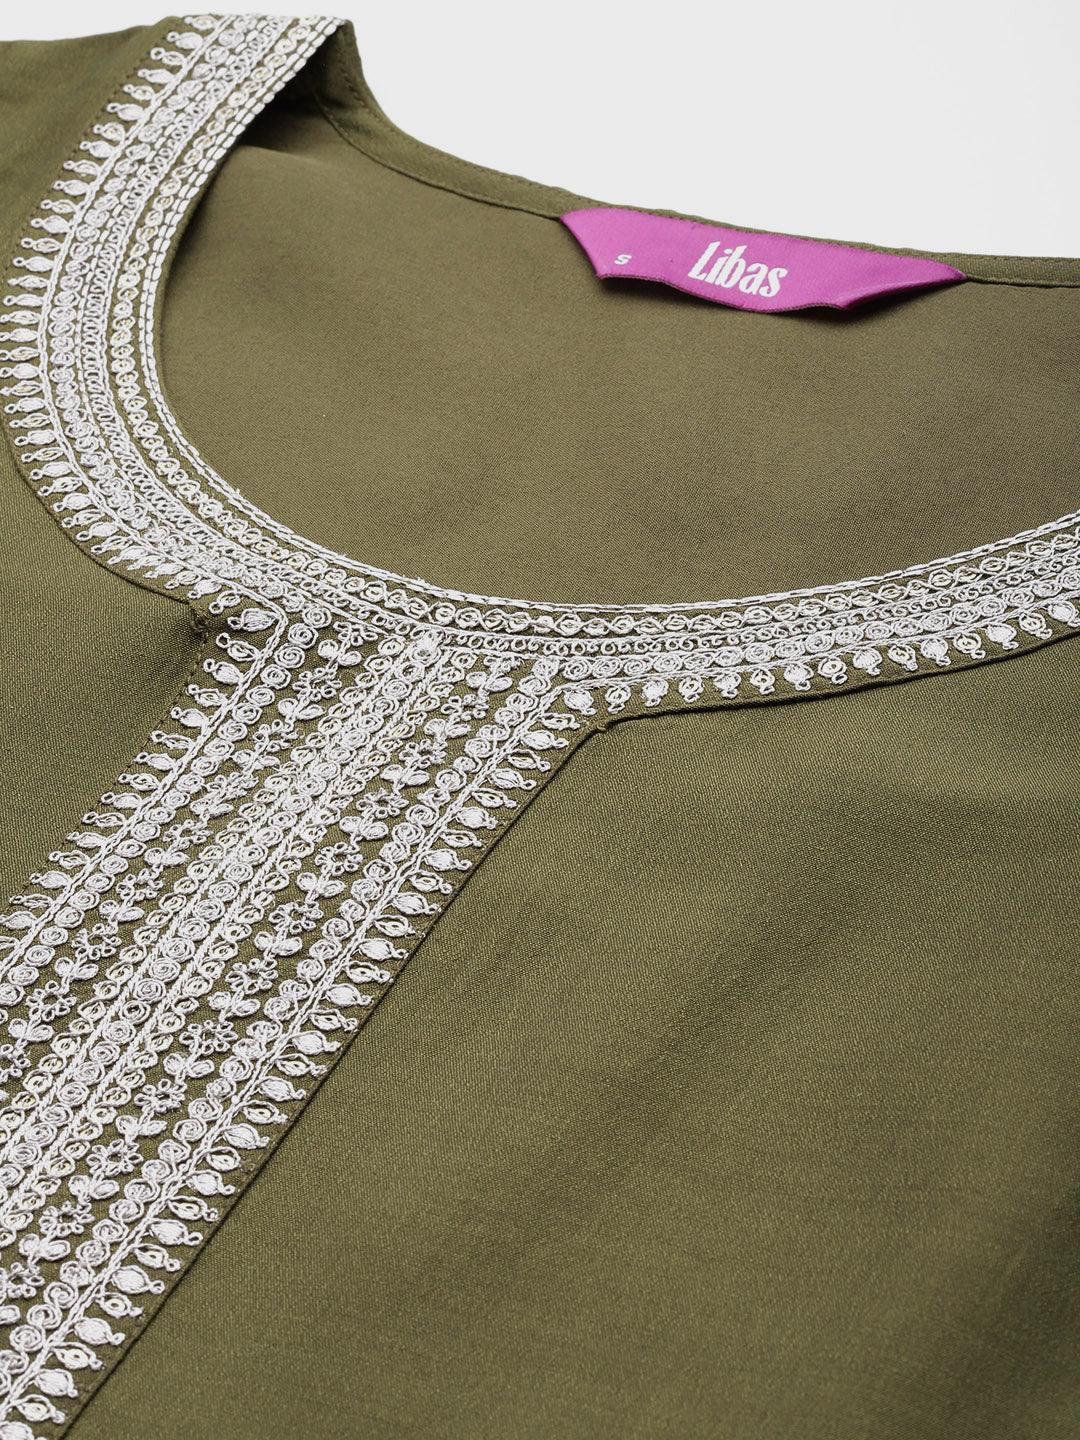 Olive Yoke Design Silk Blend Pakistani Suit